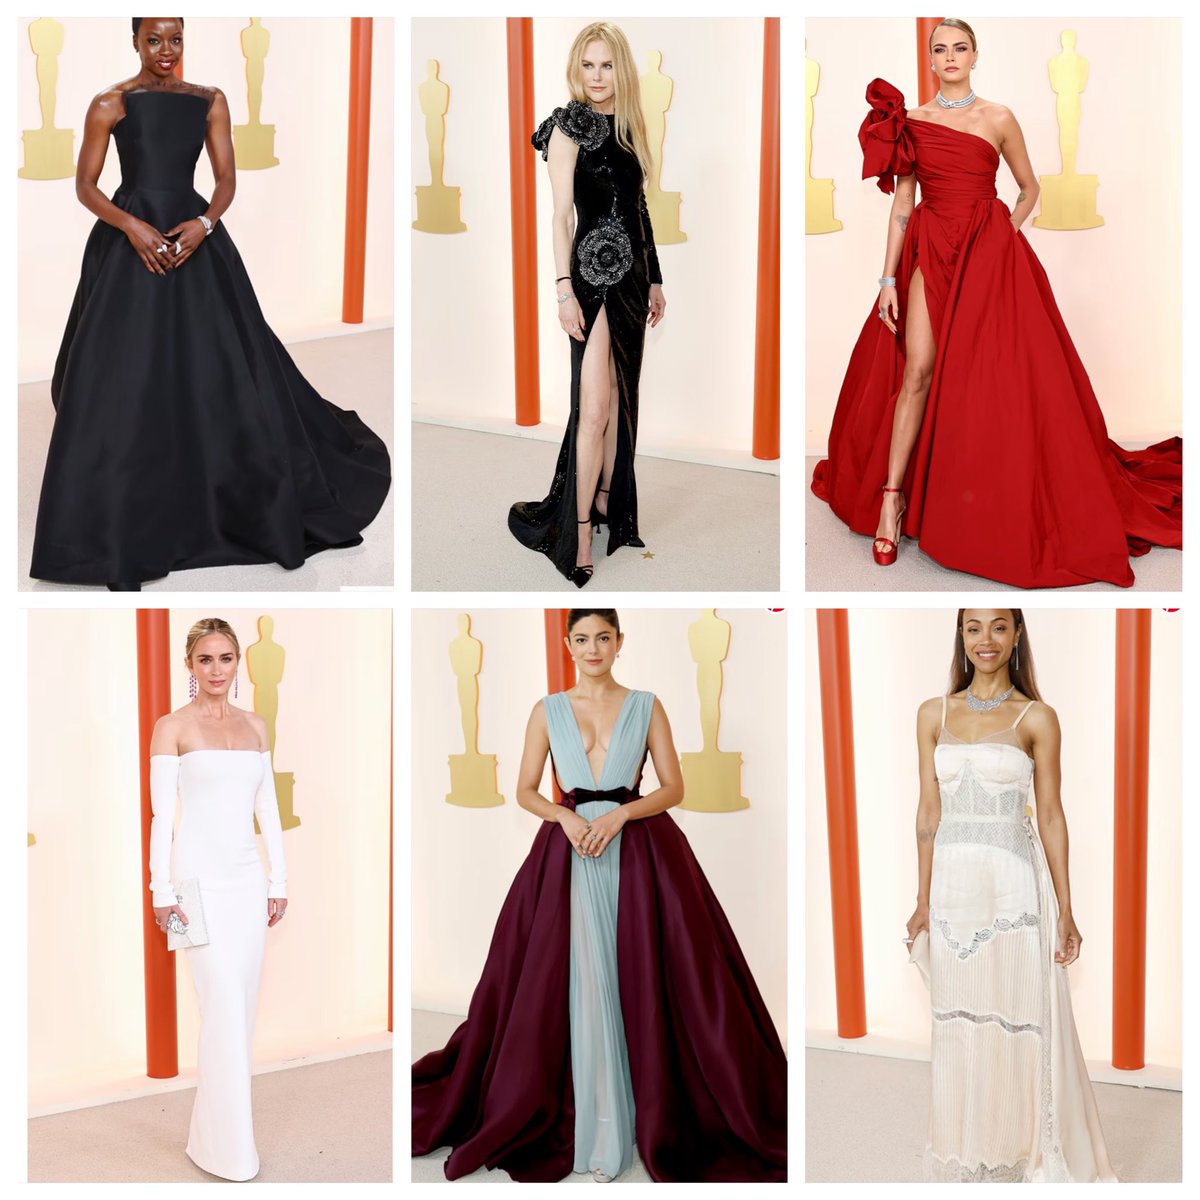 Some of my favorite dresses from #Oscars2023 #JasonWu (Danai Gurira) #ArmaniPrive (Nicole Kidman) #ElieSaab (Cara Delevingne) #Valentino (Emily Blunt) #ElieSaab (Monica Barbaro) #Fendi (Zoe Saldana) #Oscars #OscarsRedCarpet #OscarsFashion #OscarsDresses